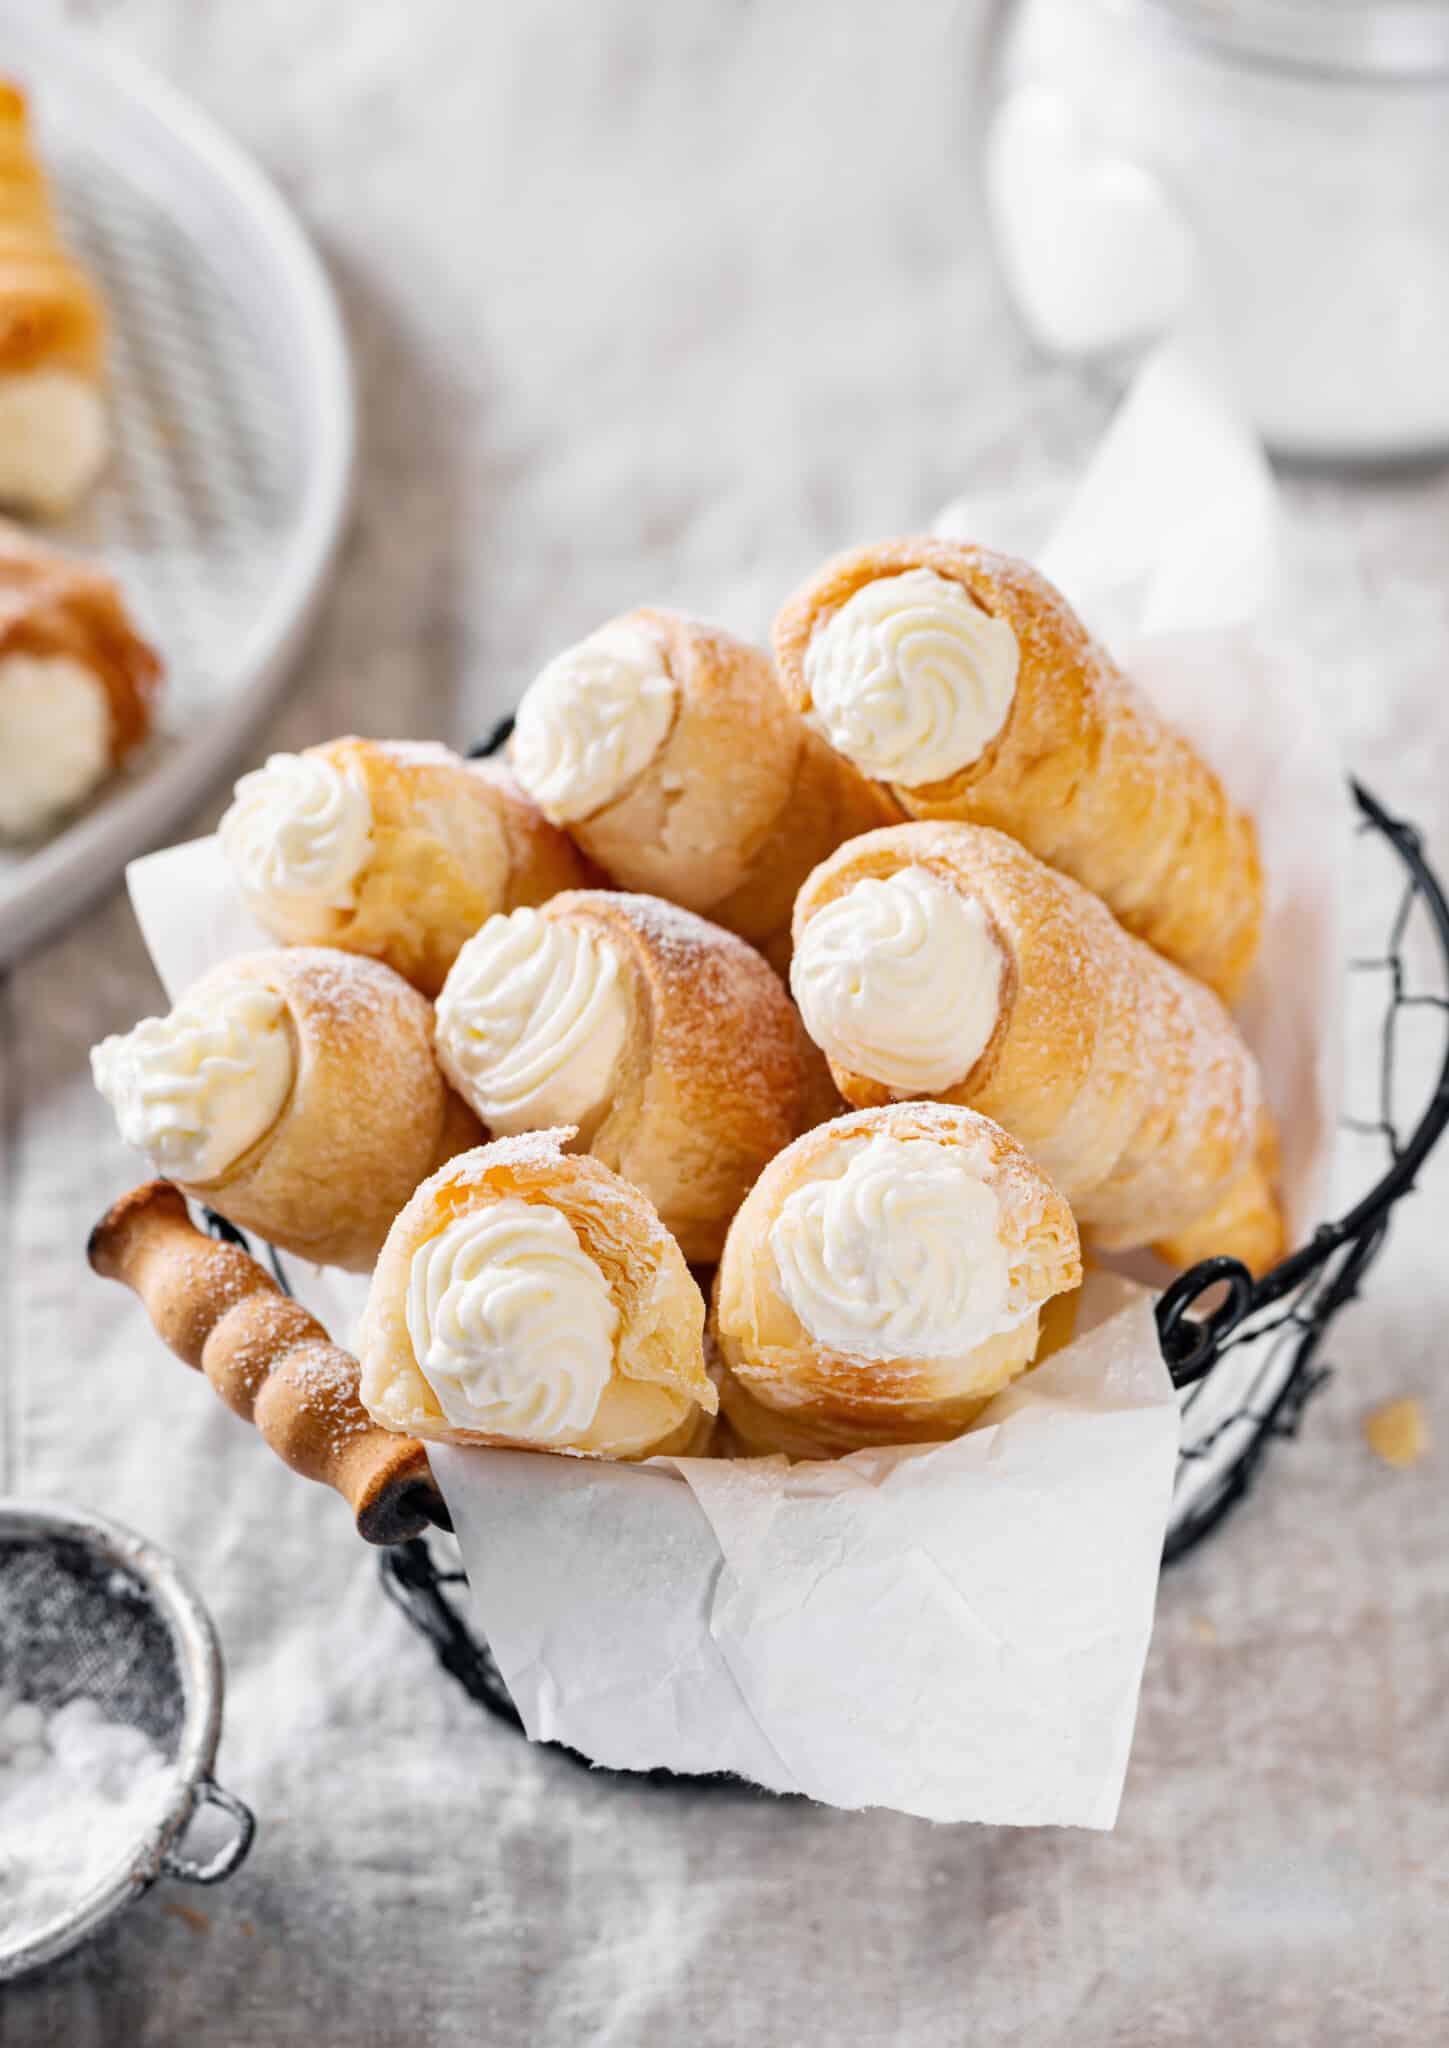 Simple and Delicate Puff Pastry Cones with Cream (Cream Horns)